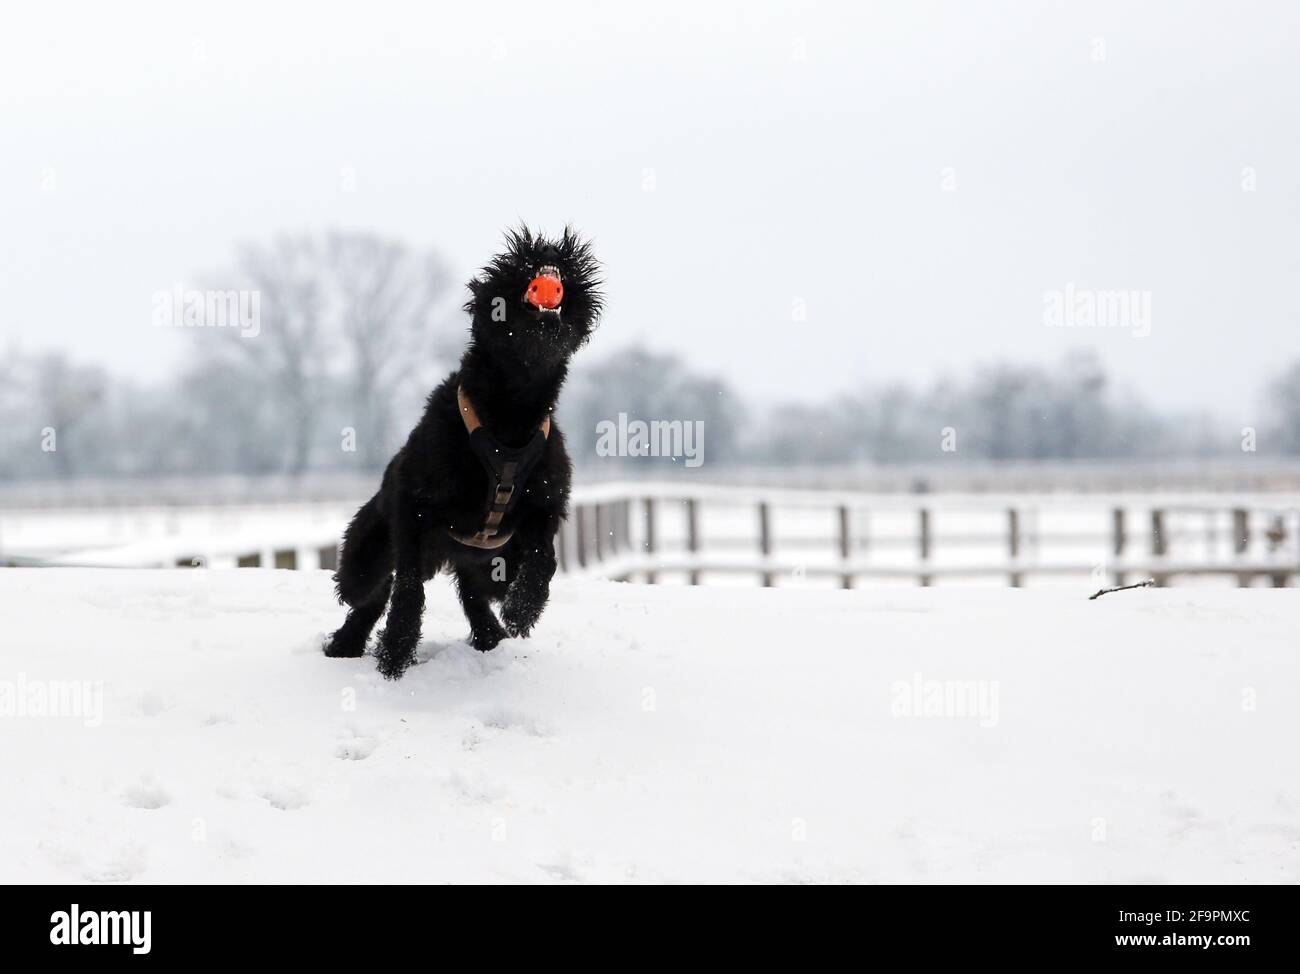 30.01.2021, Graditz, Saxony, Germany - Giant schnauzer catching a ball on a snowy meadow in winter. 00S210130D385CAROEX.JPG [MODEL RELEASE: NO, PROPER Stock Photo